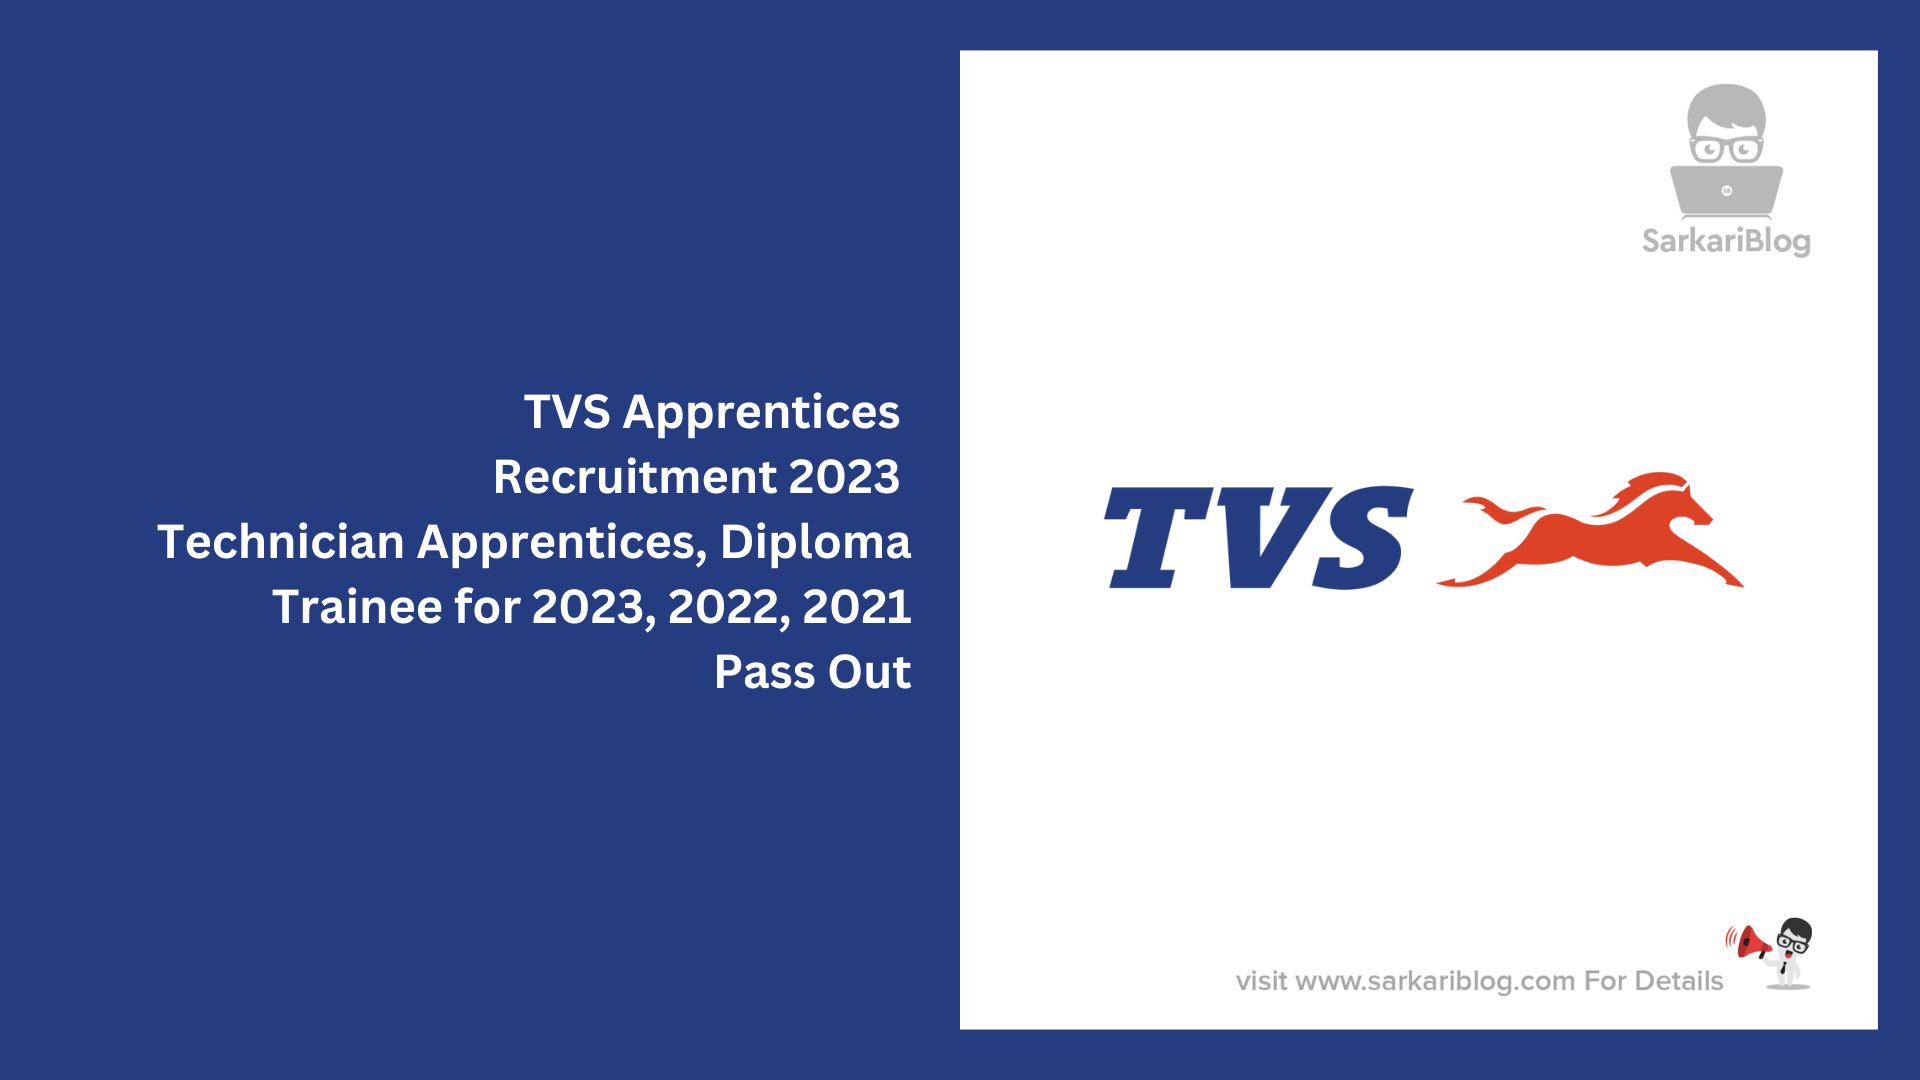 TVS Apprentices Recruitment 2023 Notification